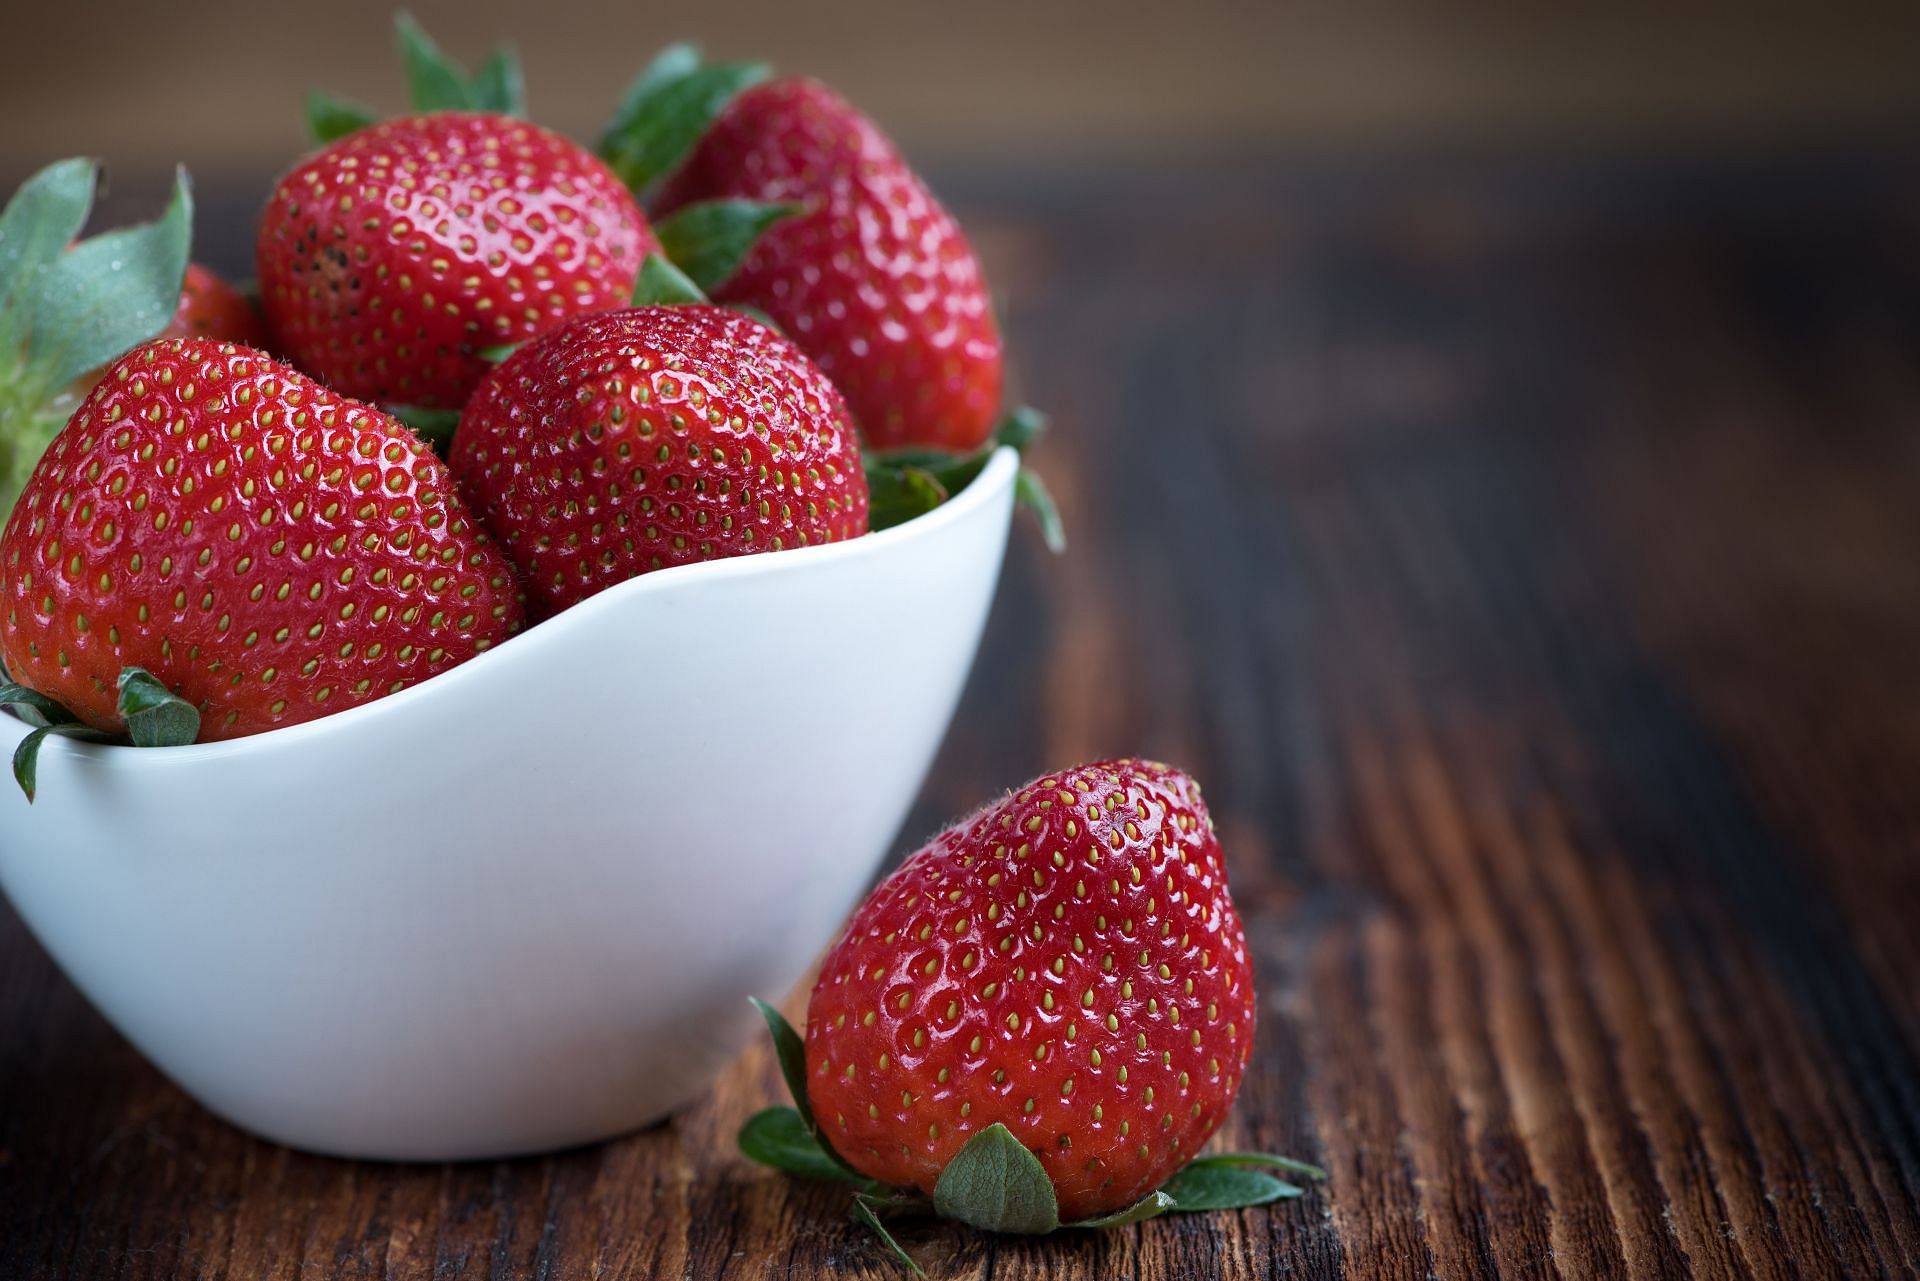 Strawberries pack in 2g of fiber per 100g of serving (Image via Pexels @Pixabay)